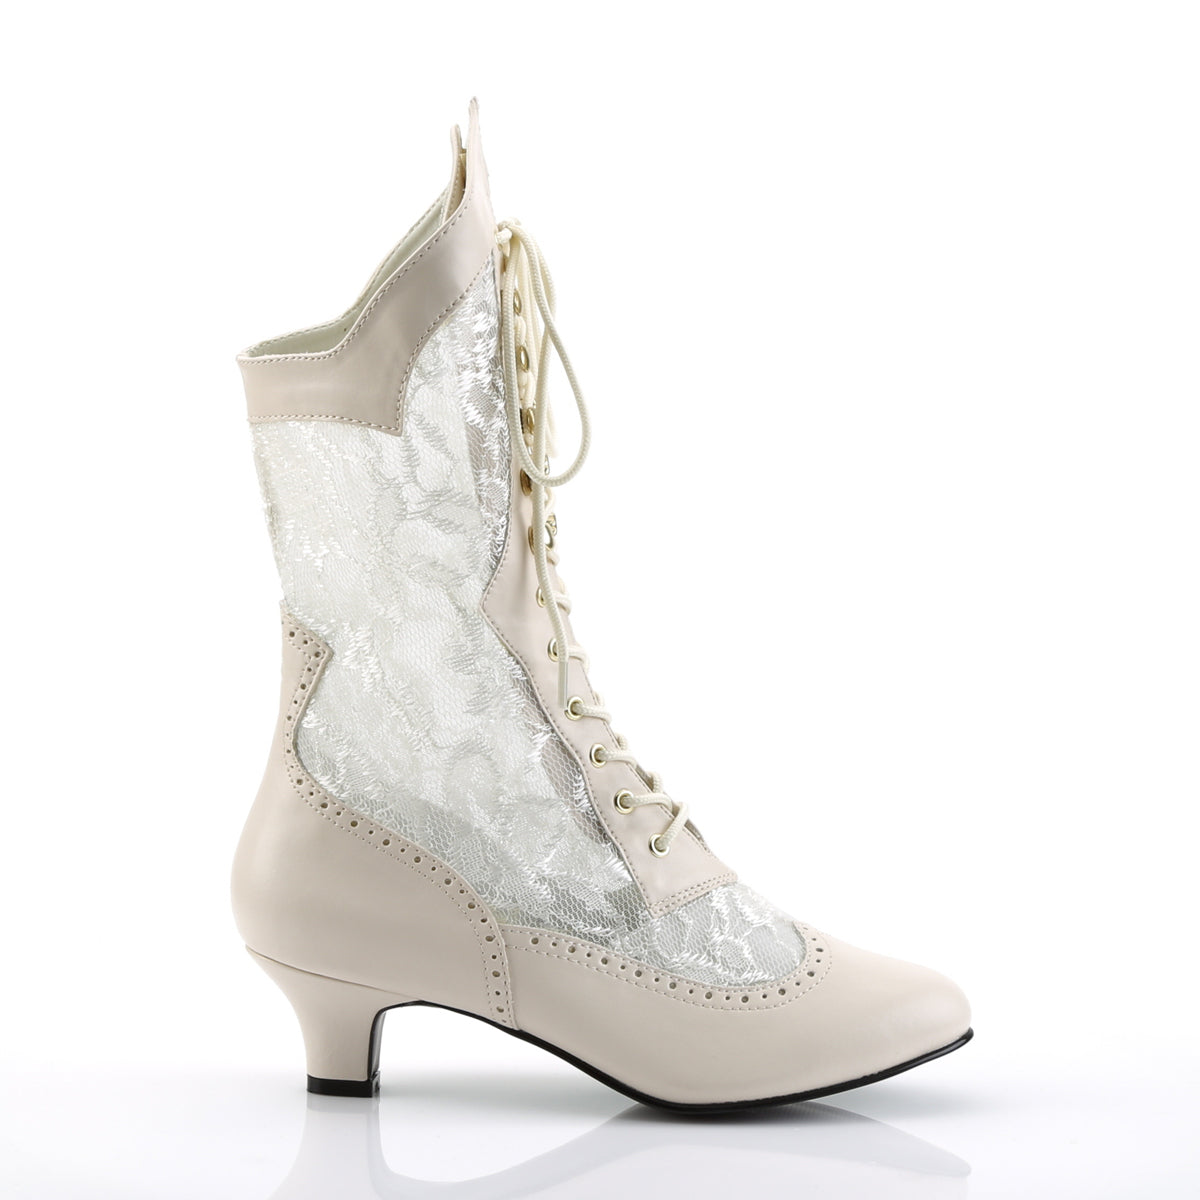 DAME-115 2 Inch Heel Ivory Pu Women's Boots Funtasma Costume Shoes Fancy Dress